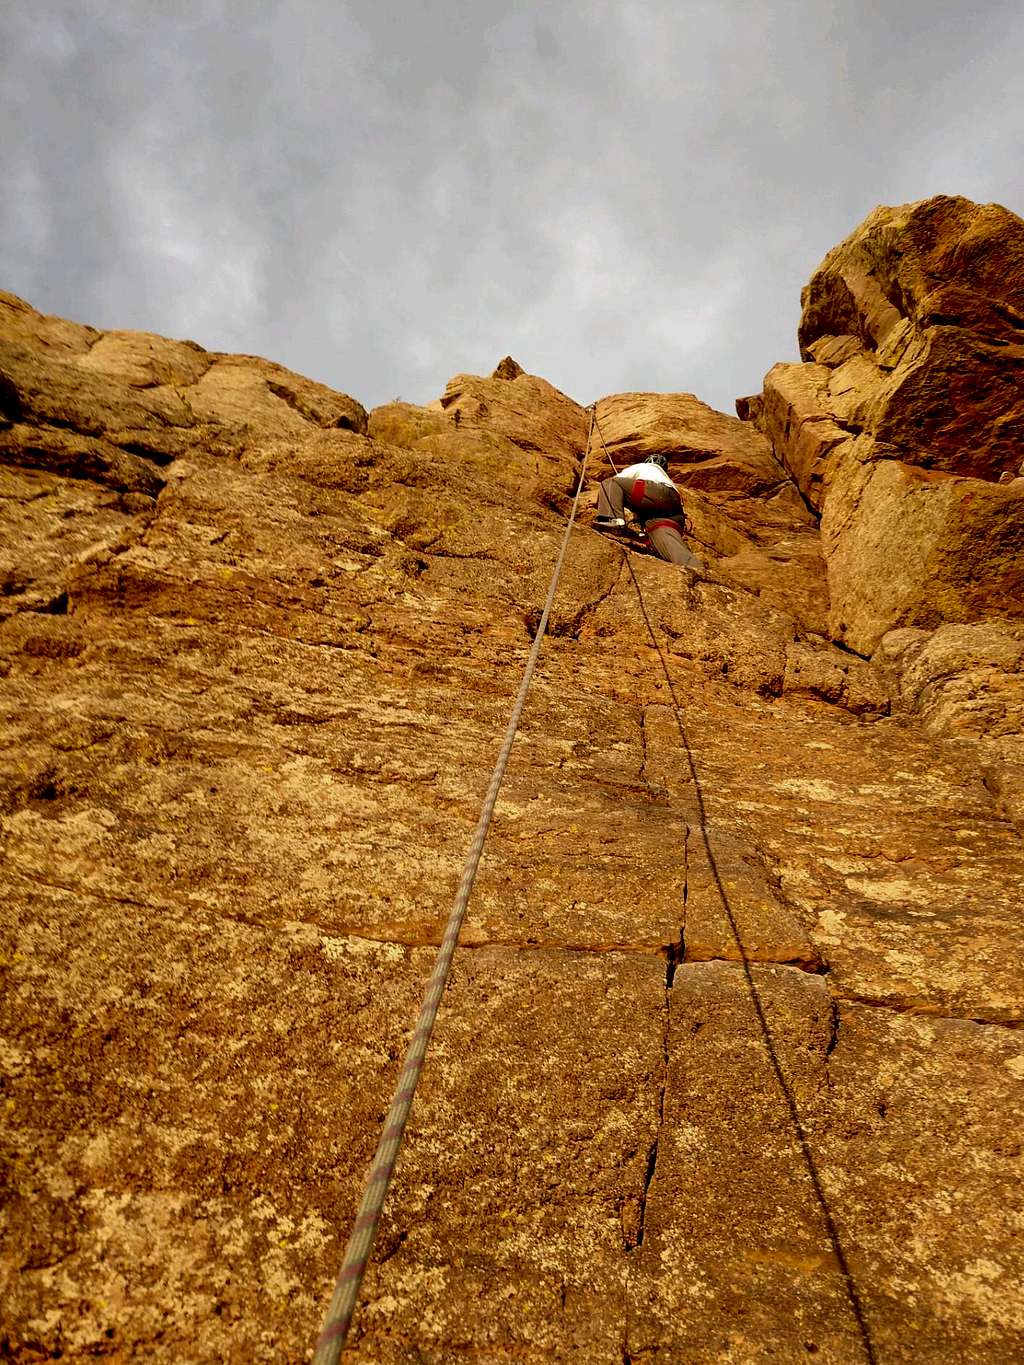 Climbing Duncan's Ridge